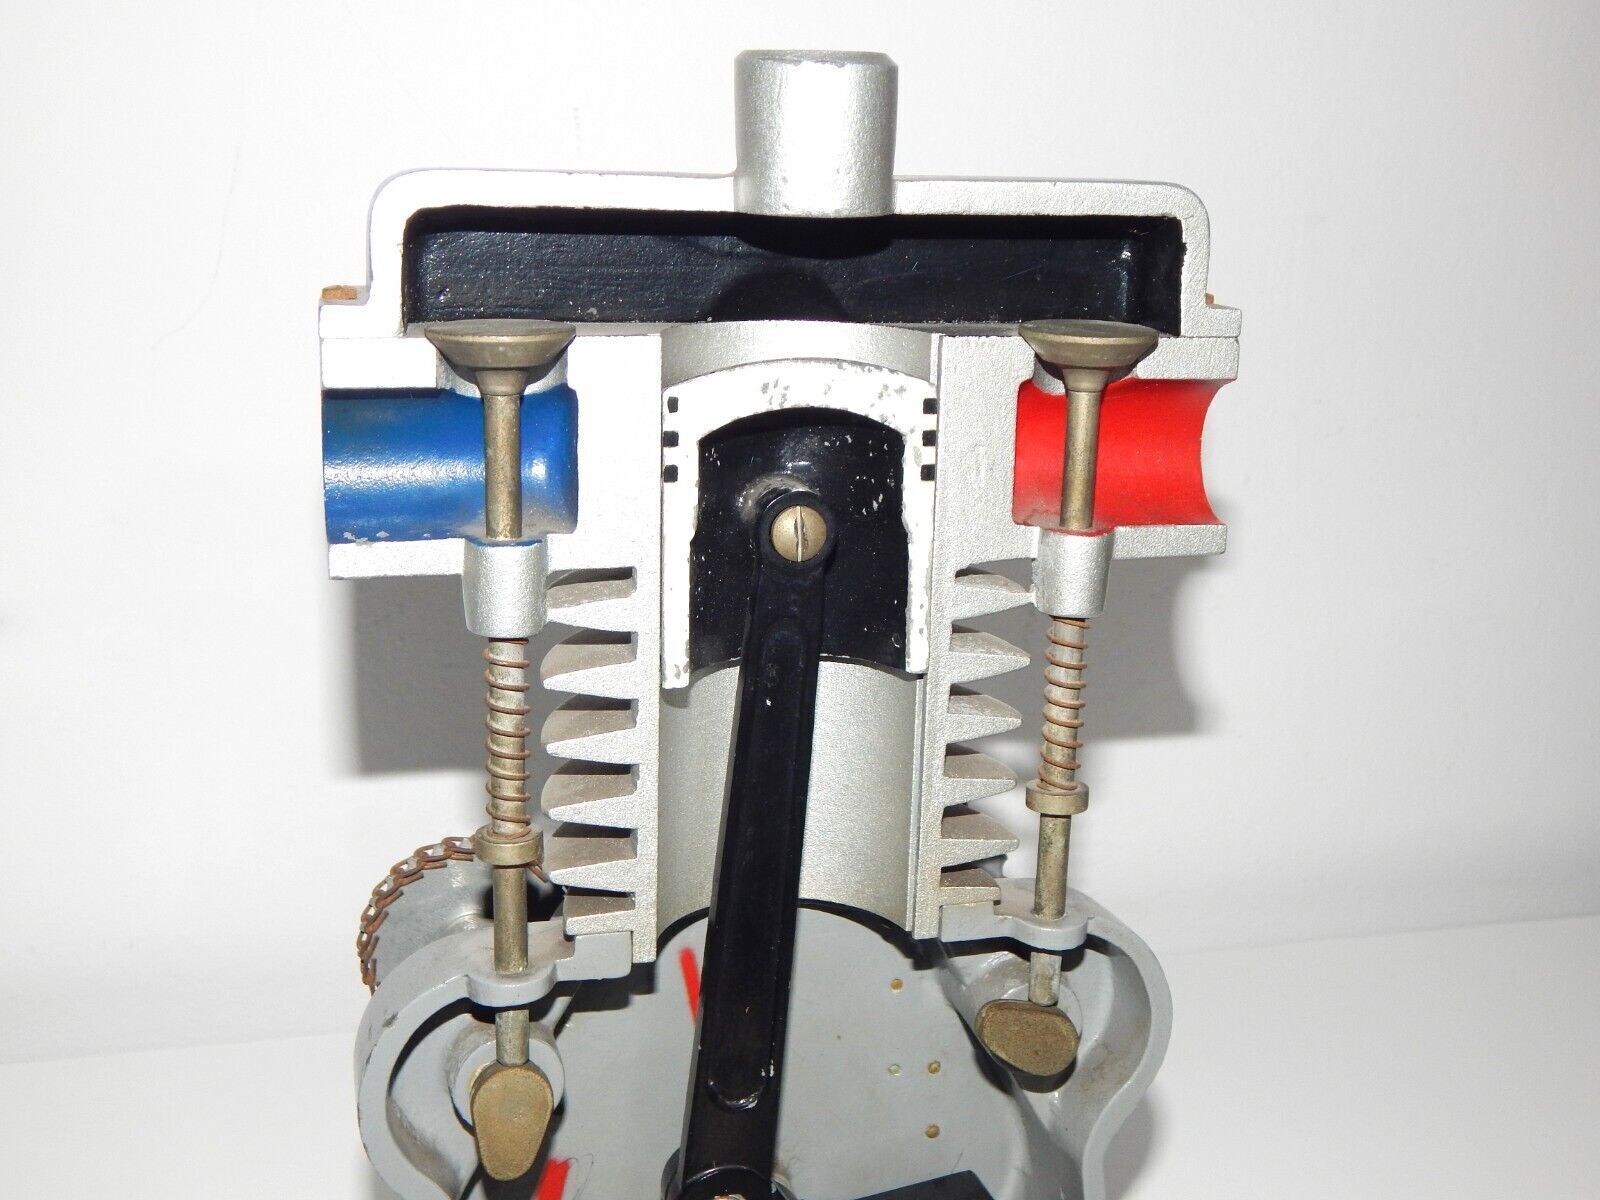 used Old driving school model four-stroke engine engine demonstration model...